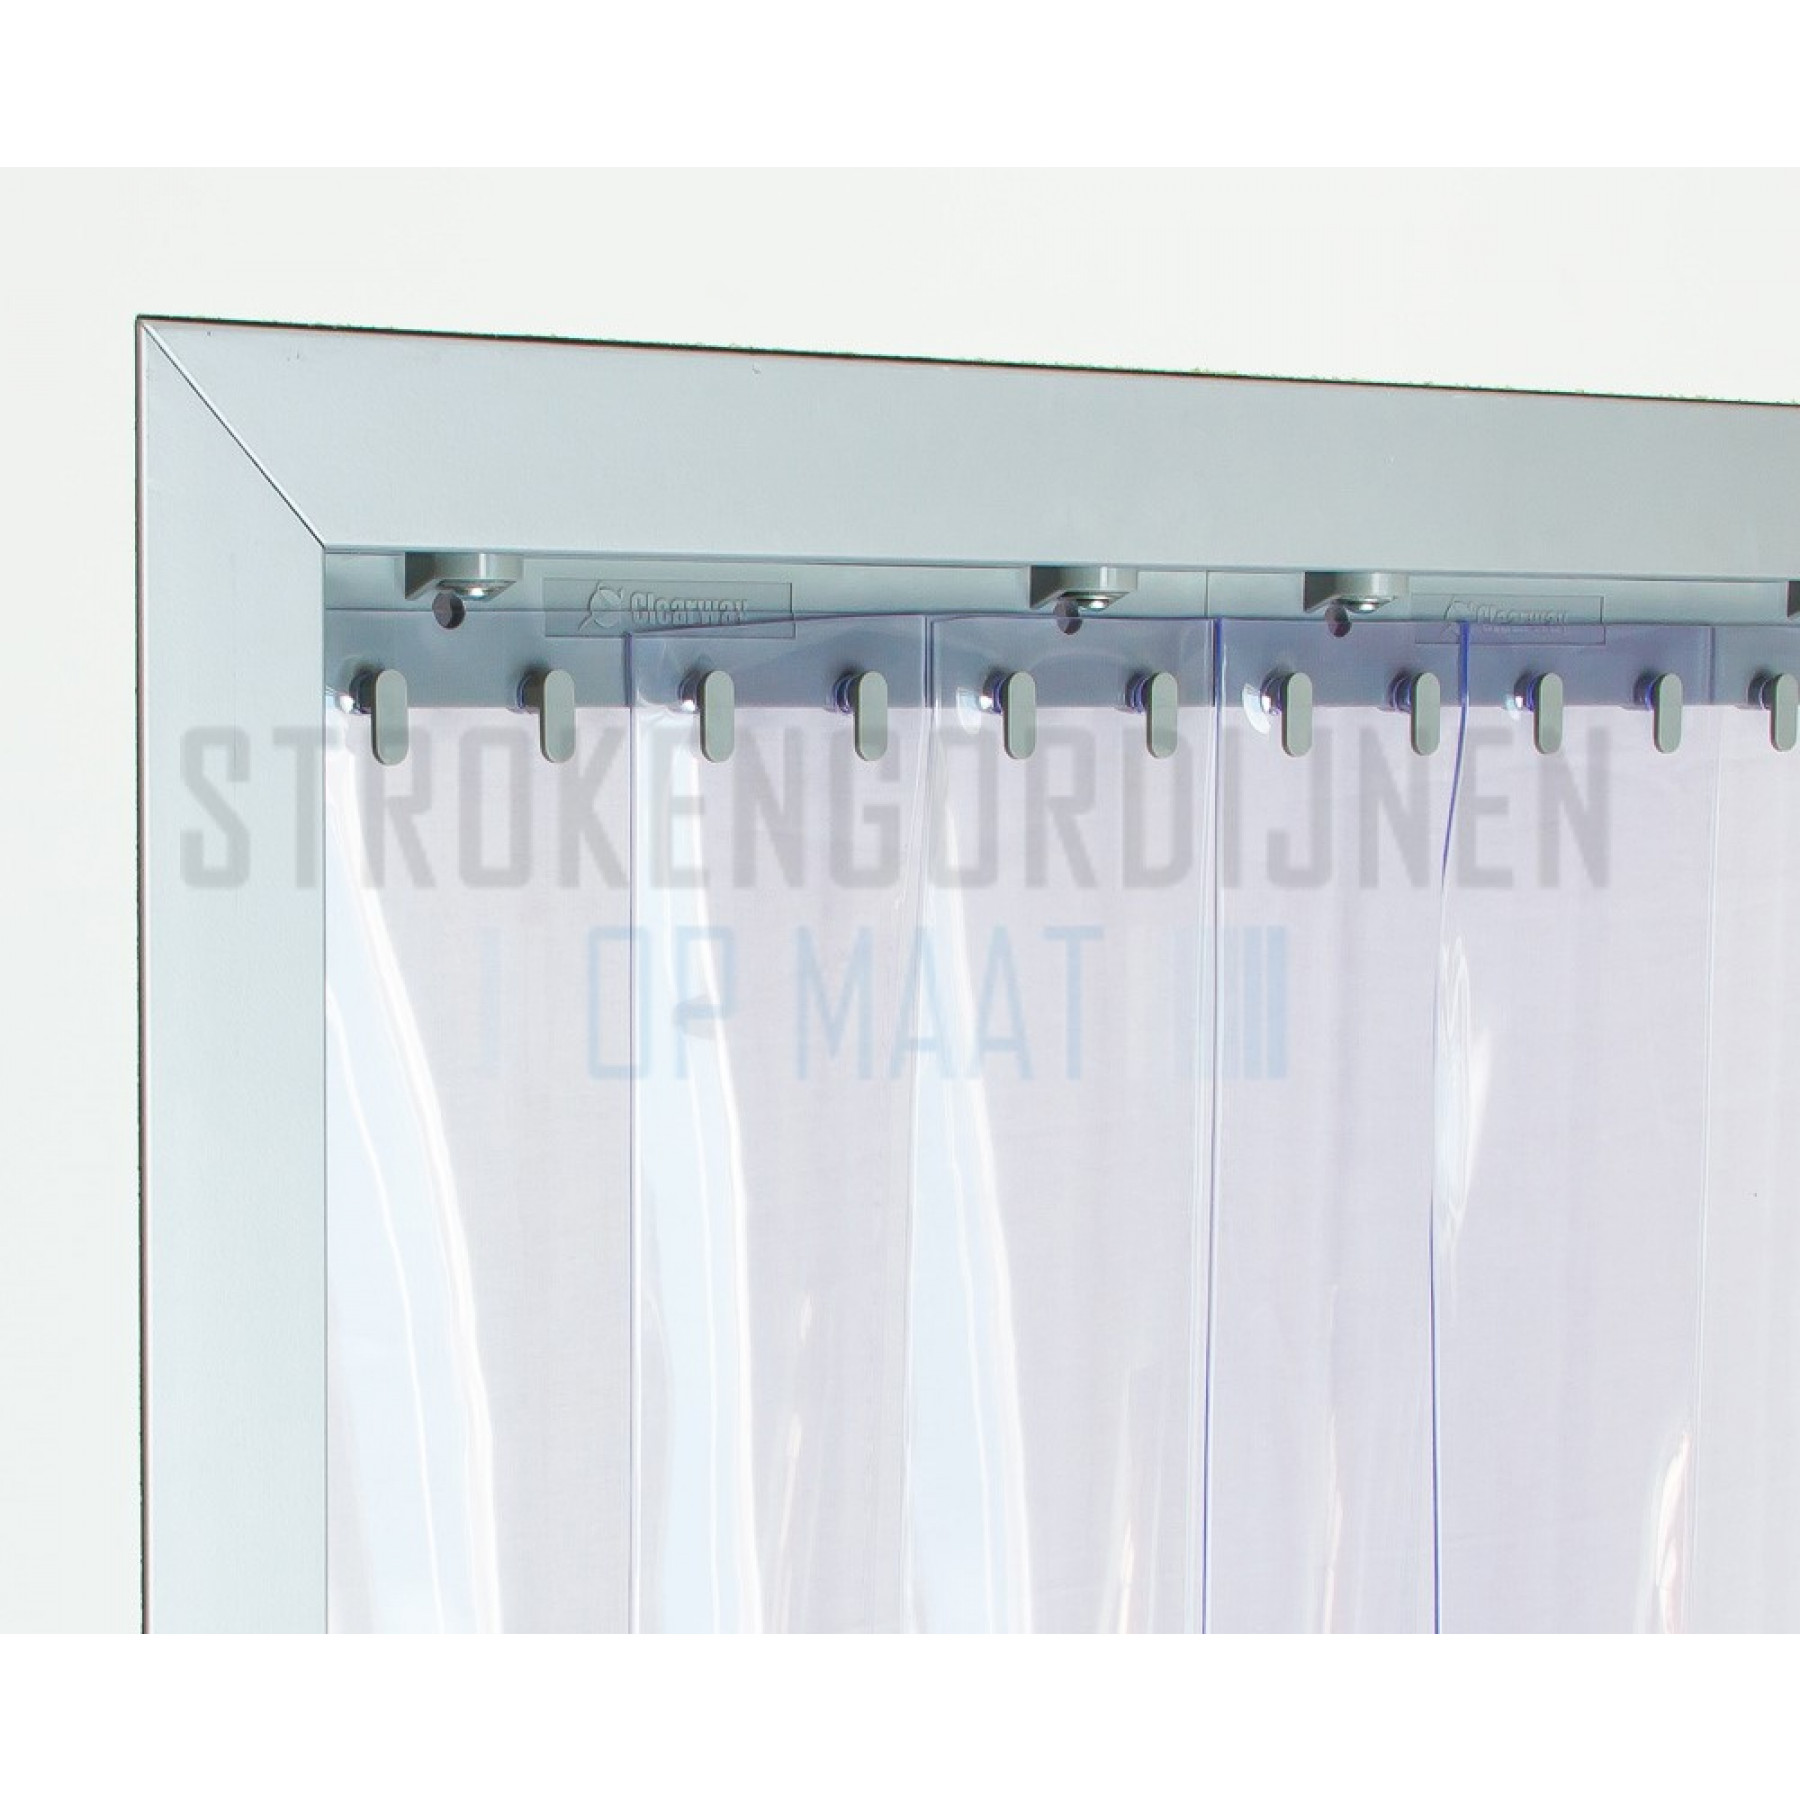 PVC Rolle, 200mm breit, 2mm dick, 50 Meter lang, Super Tiefkühlraum Qualität, transparent